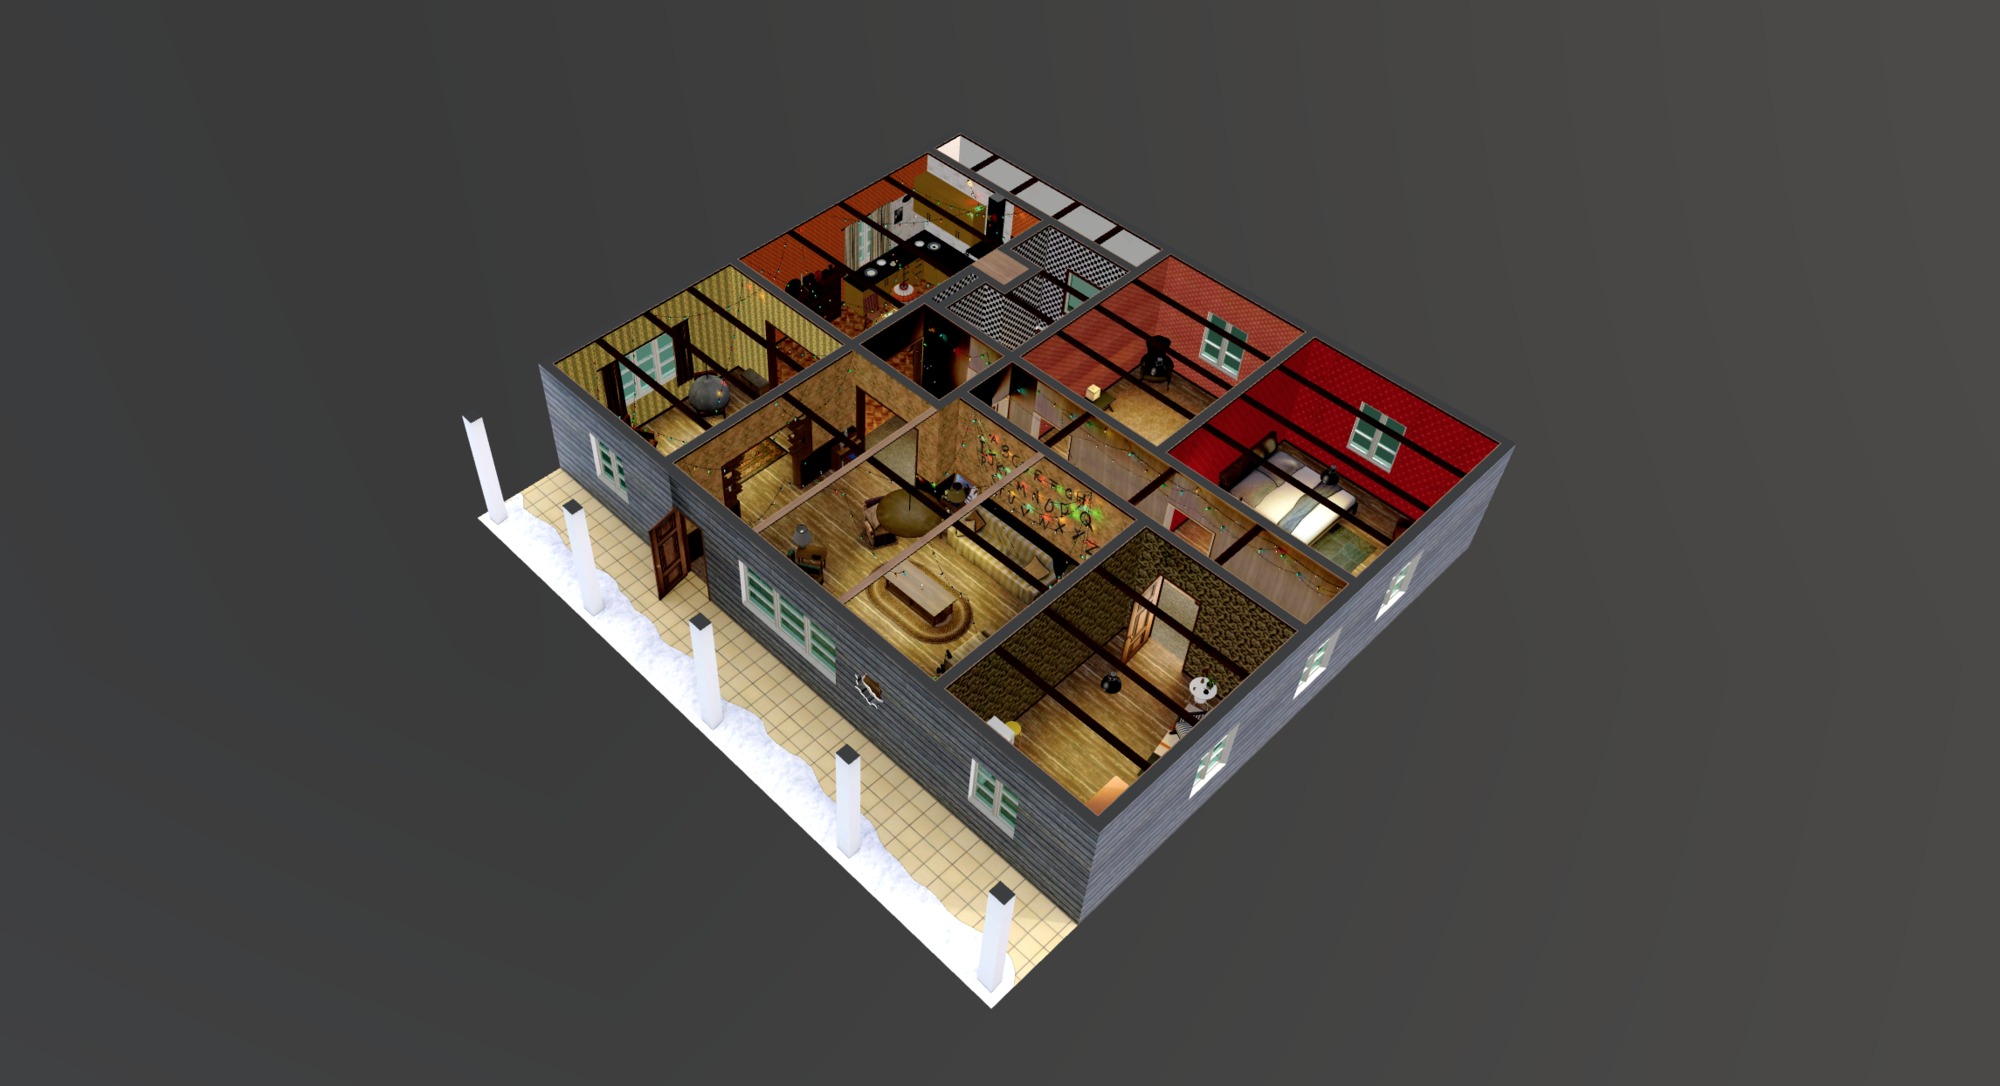  3D-model toont alle details van het huis uit Stranger Things